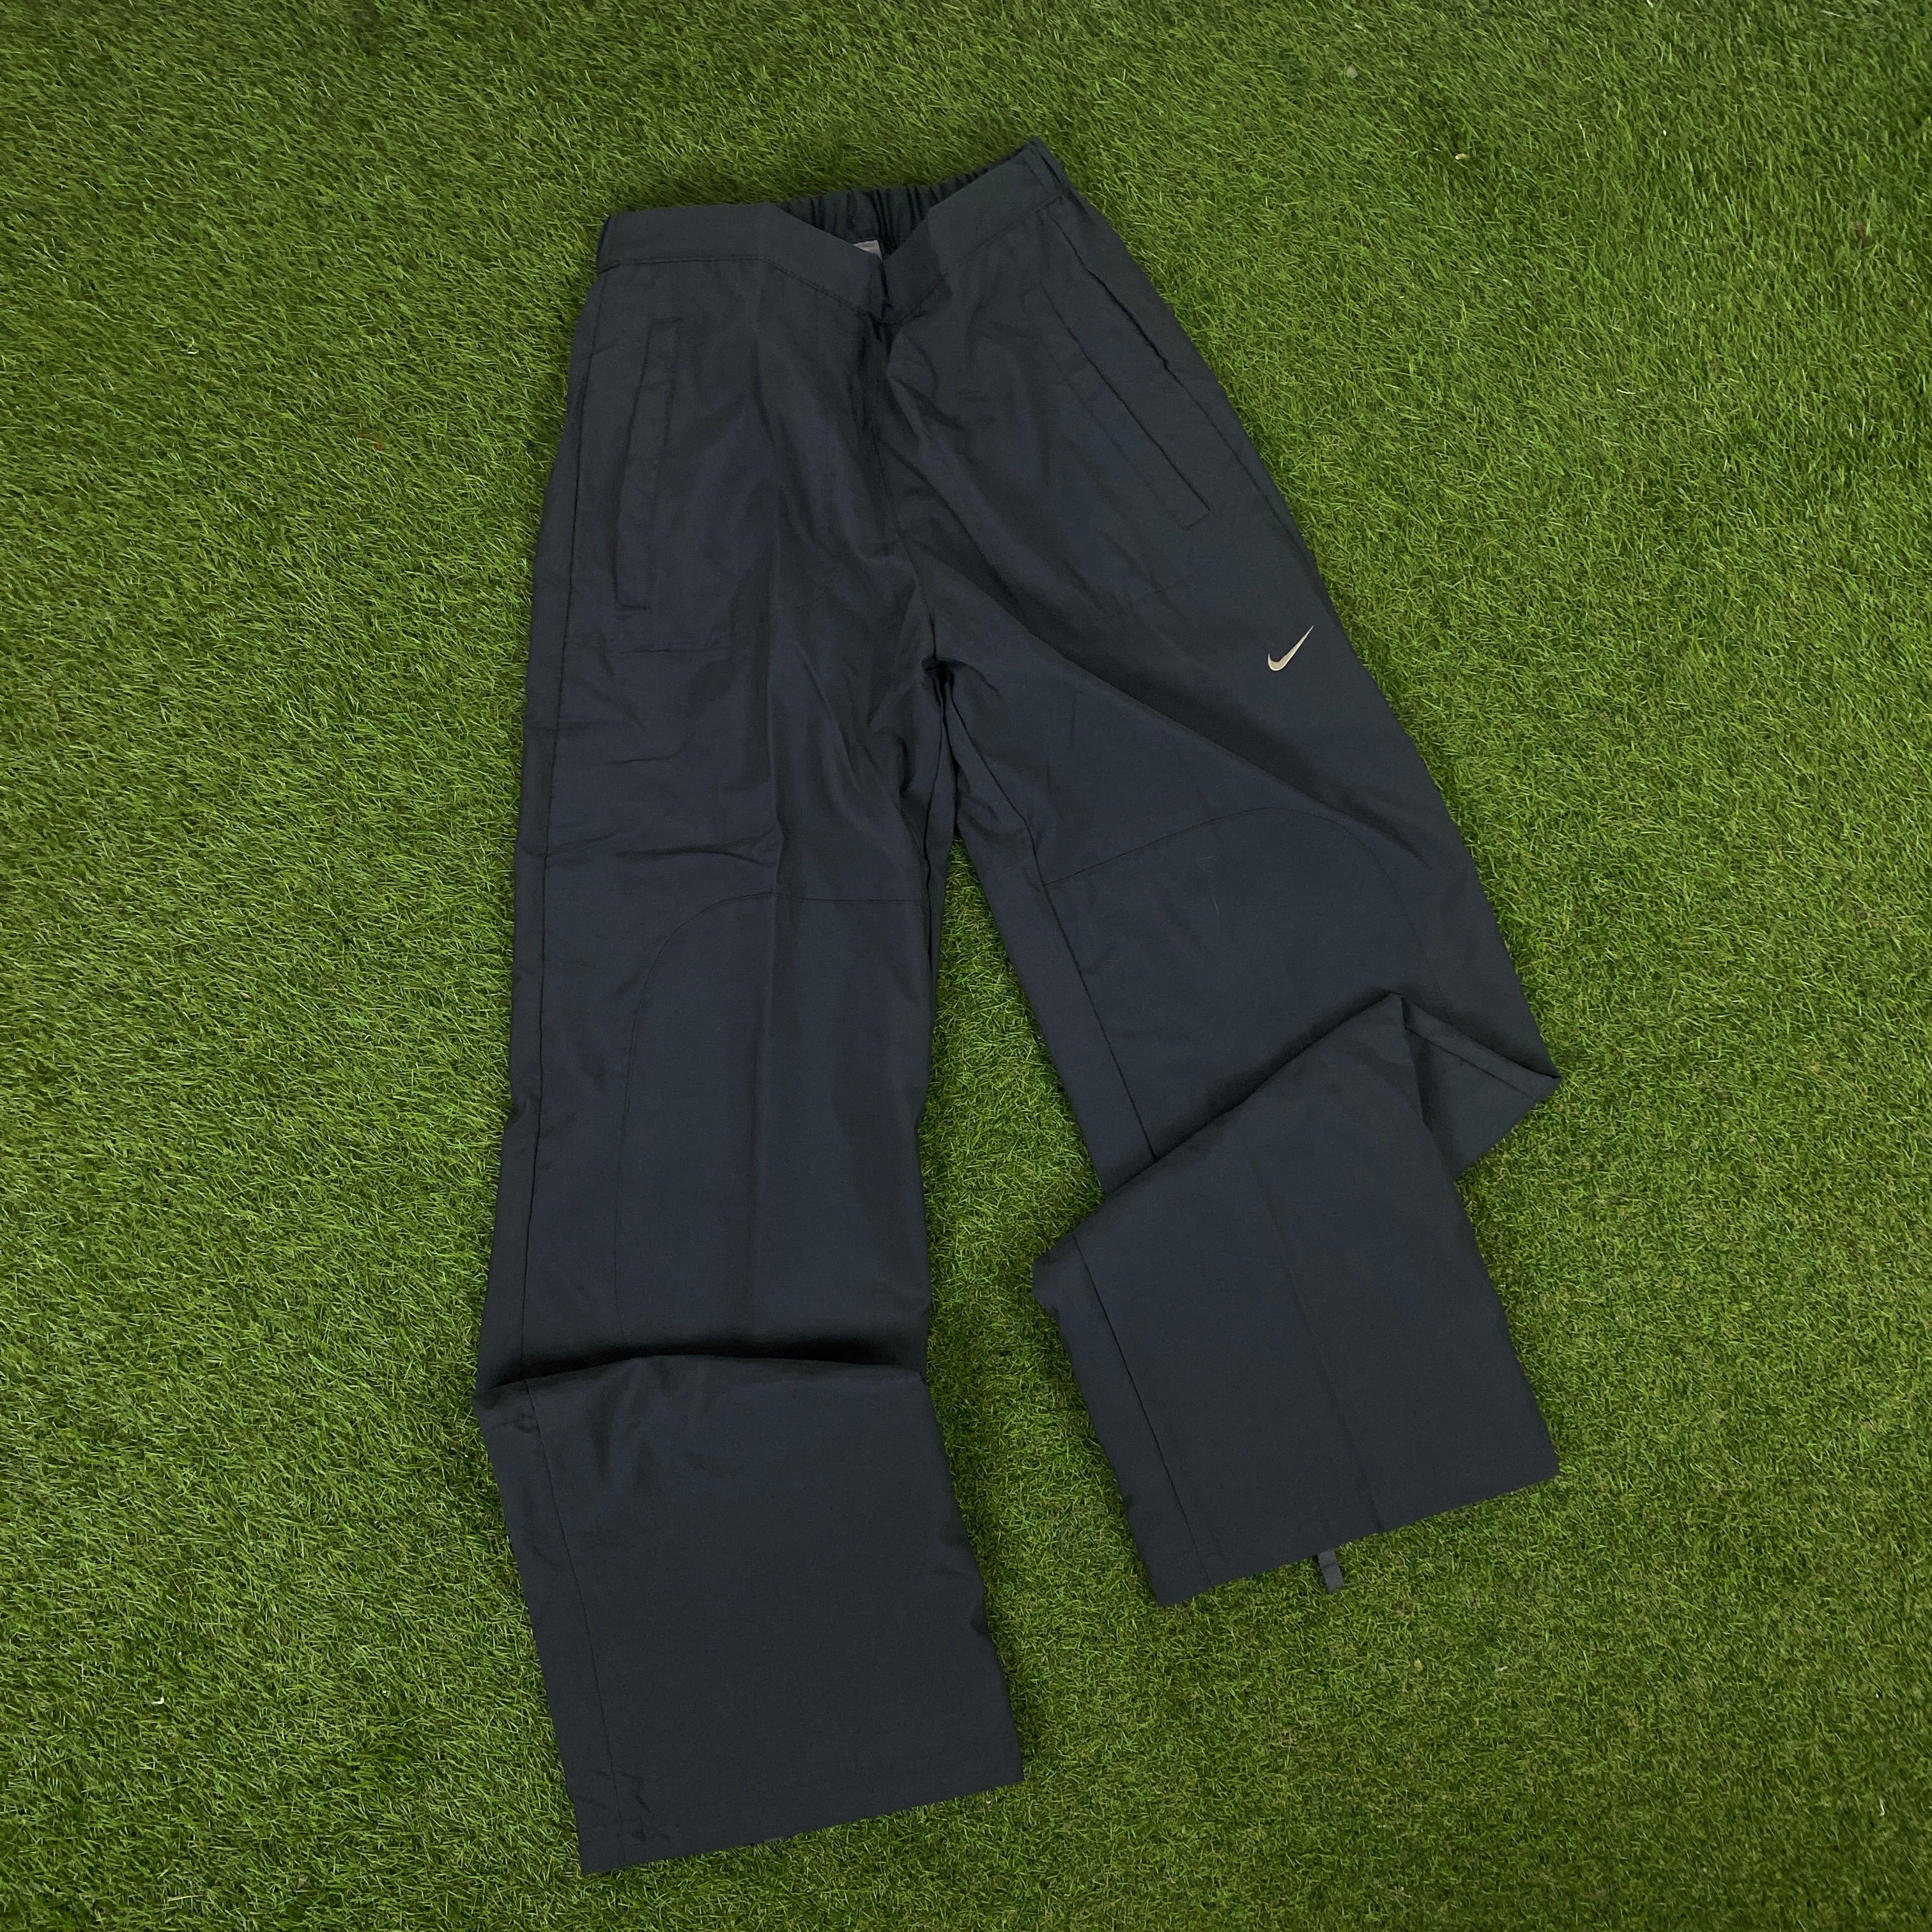 00s Nike Clima-Fit Piping Jacket + Joggers Set Pink Medium